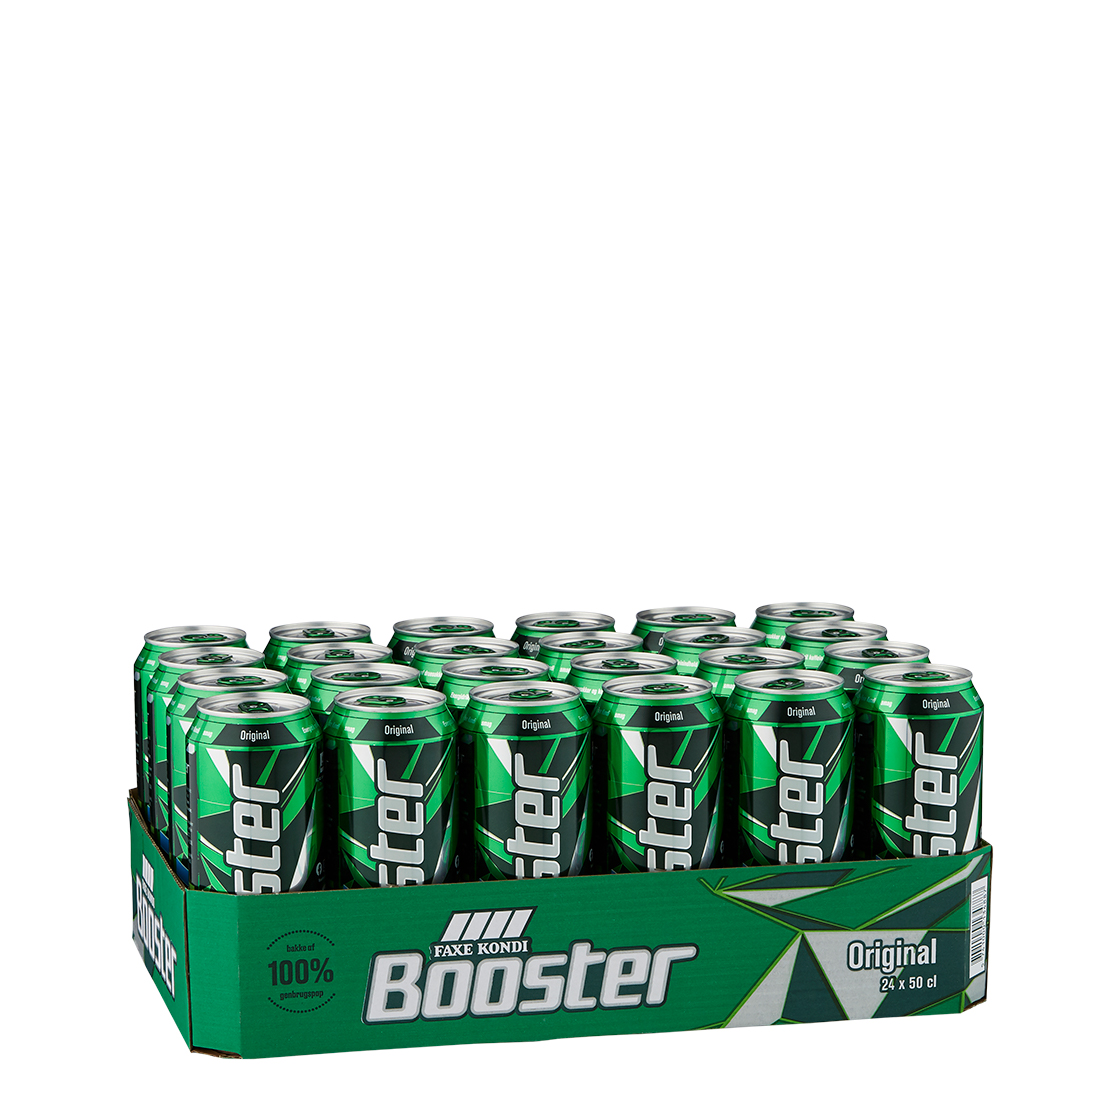 Faxe Kondi Booster Original 0,5L 24 CANS/CASE